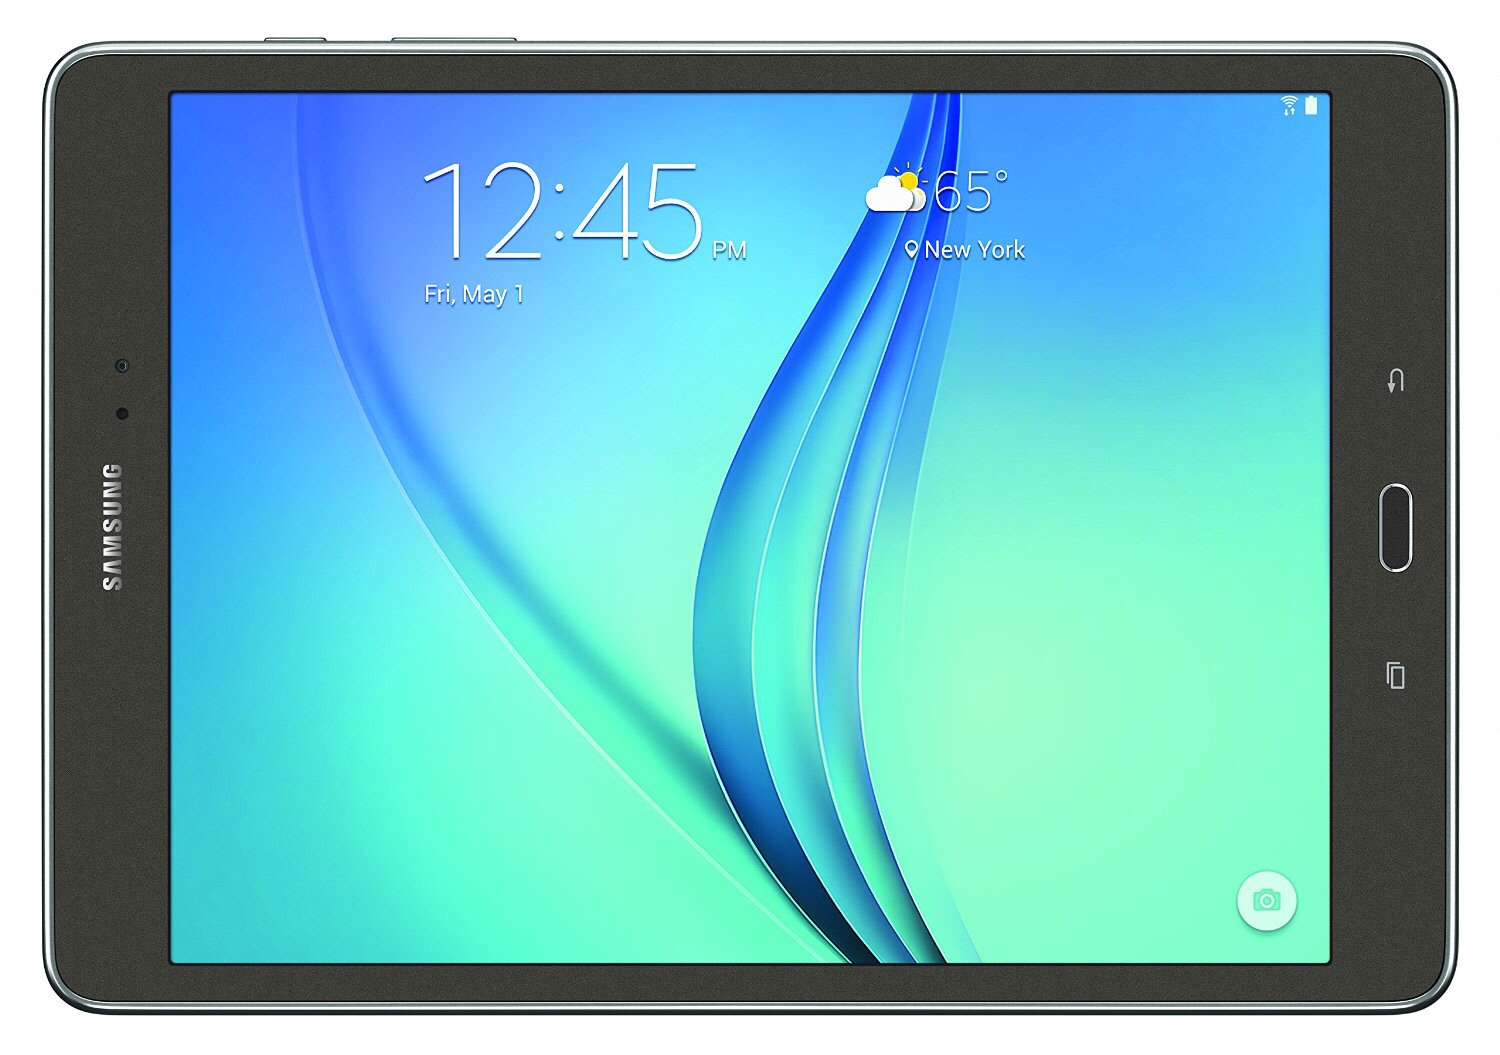 Buy Galaxy Tab S3 Case, OEAGO Samsung Galaxy Tab S3 Inch Case Cover Accessories - Ultra Lightweight Slim shell Stand Case Cover For Samsung Galaxy Tab S3 